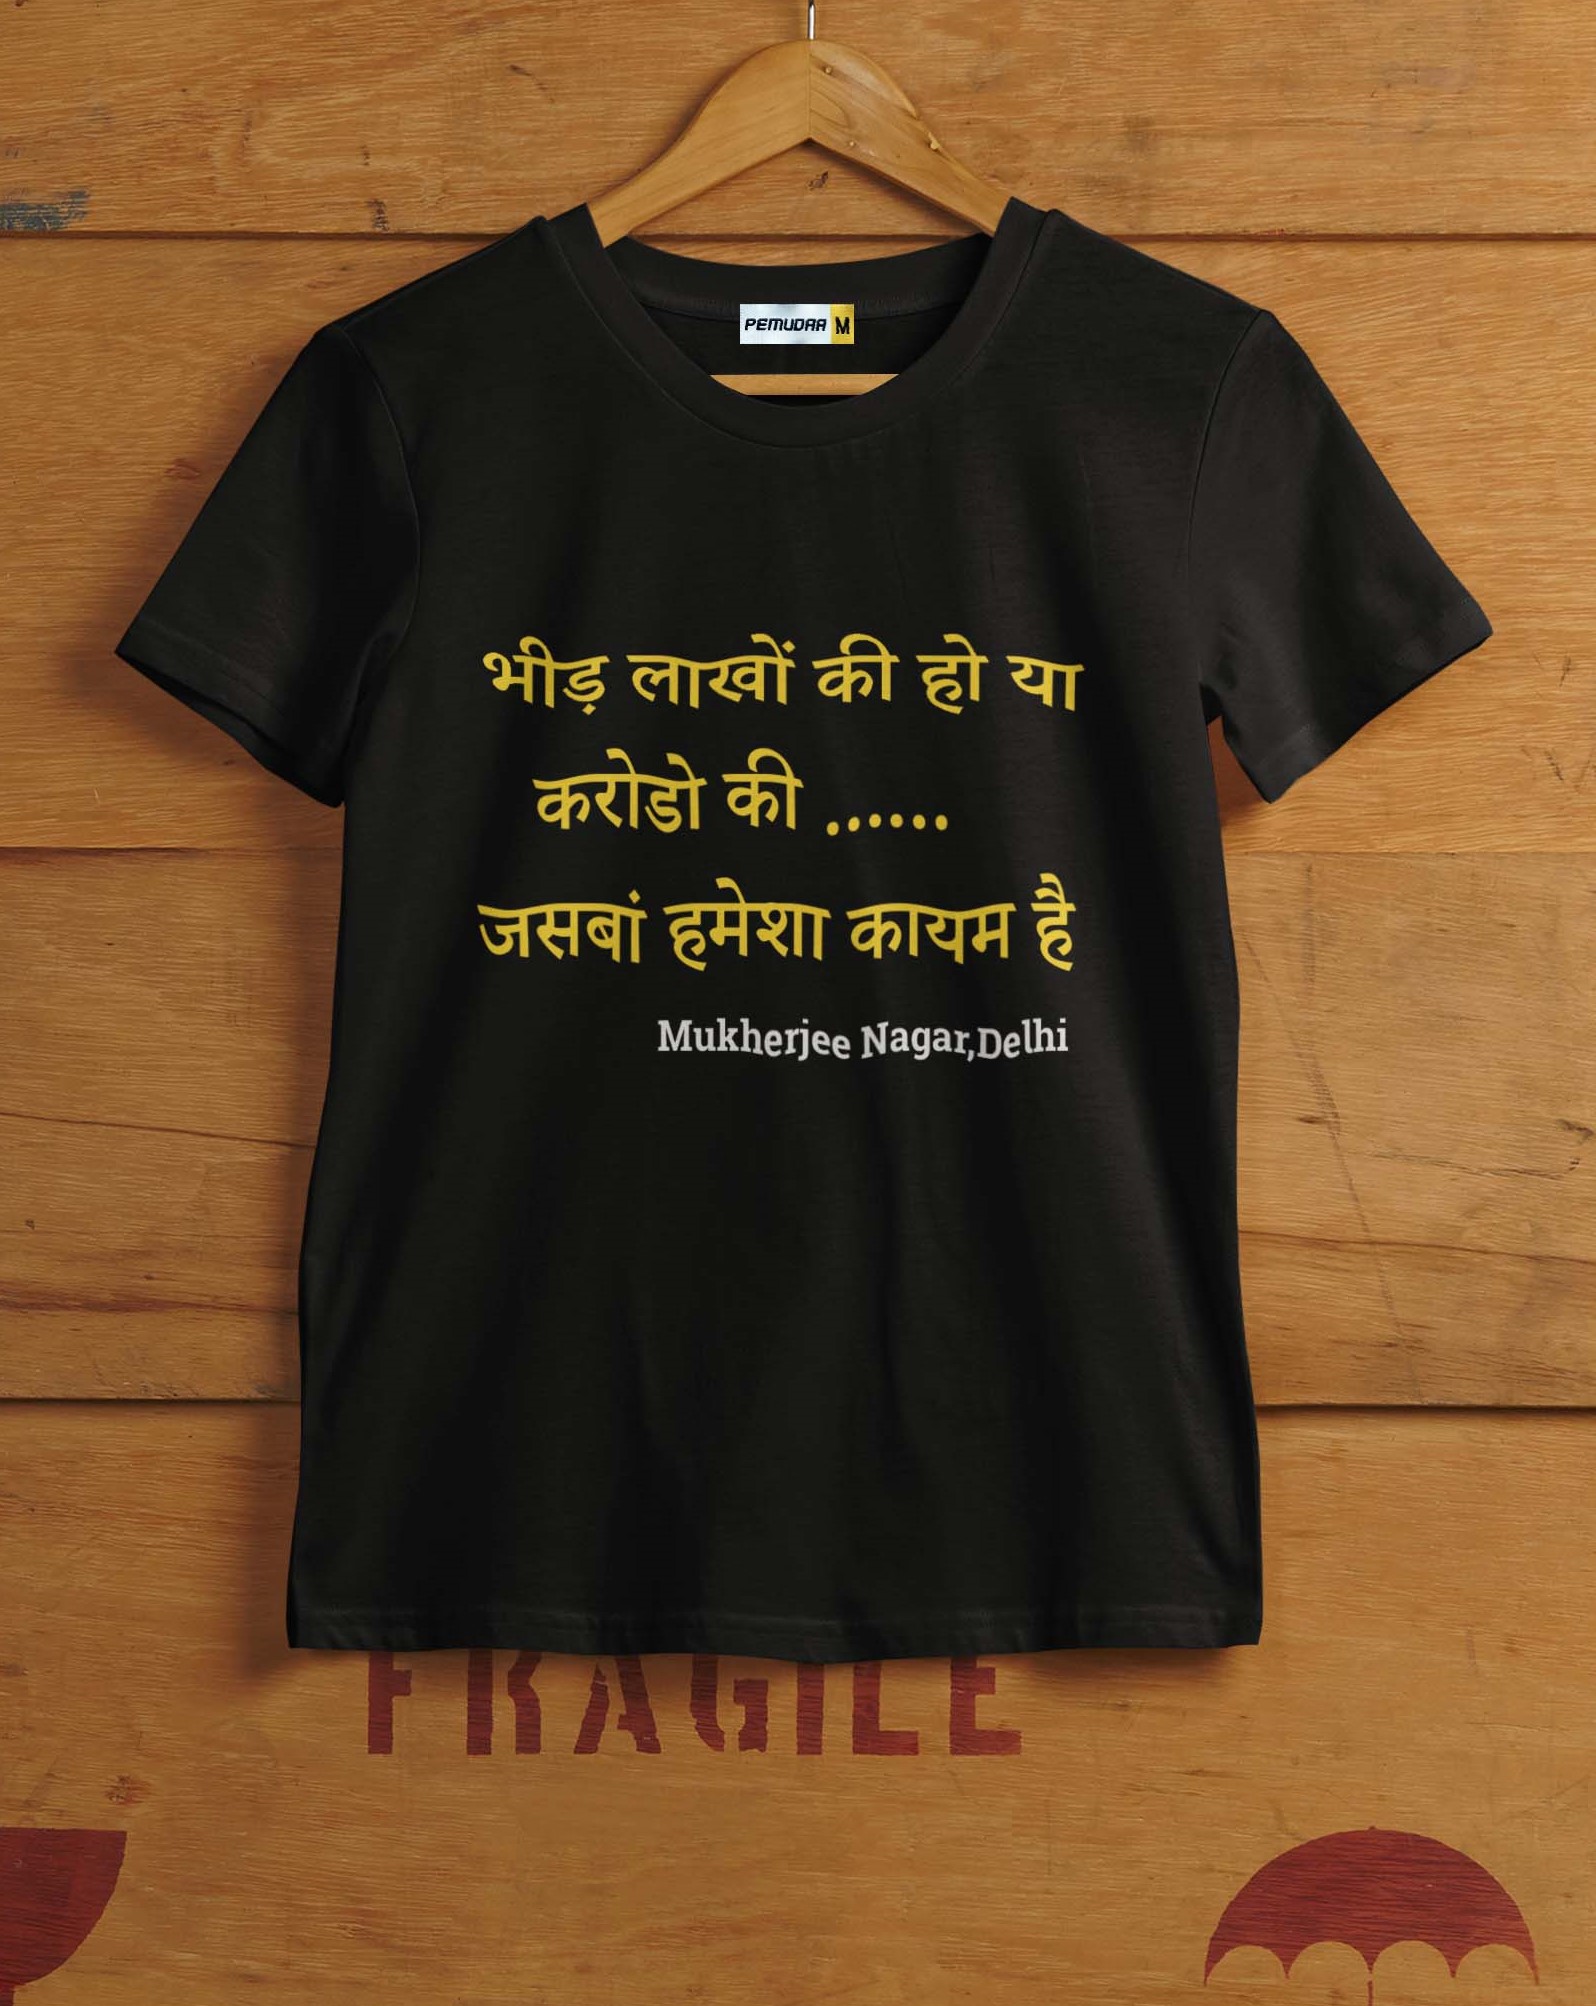 Mukherjee Nagar Delhi Motivational Typography - Graphic Printed T Shirt - Black